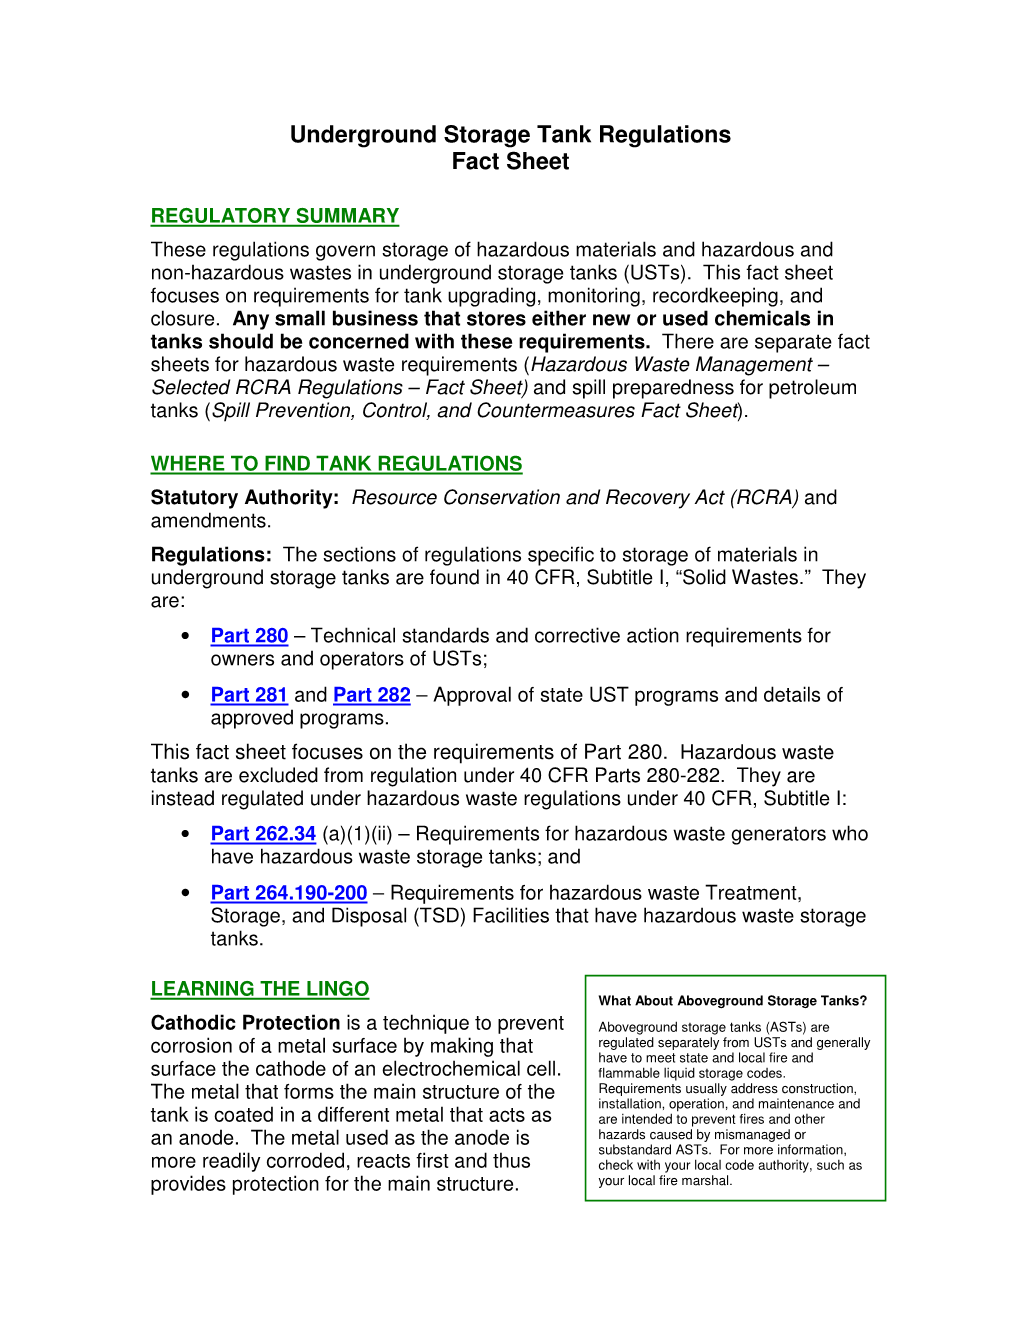 Underground Storage Tank Regulations Fact Sheet